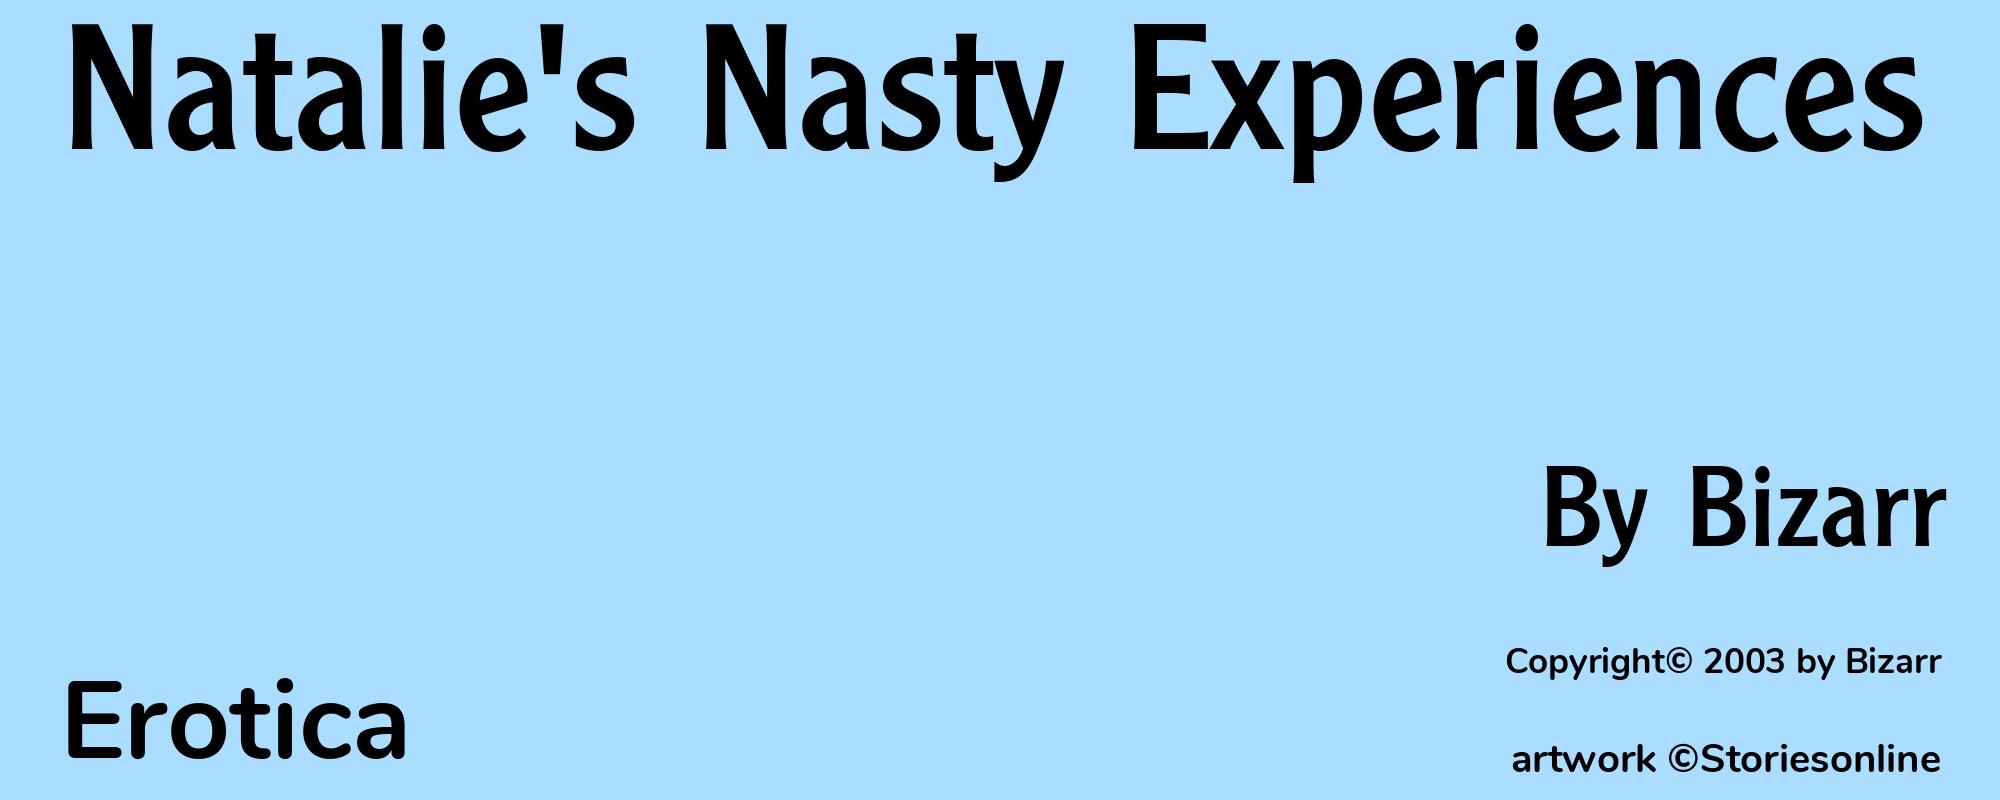 Natalie's Nasty Experiences - Cover